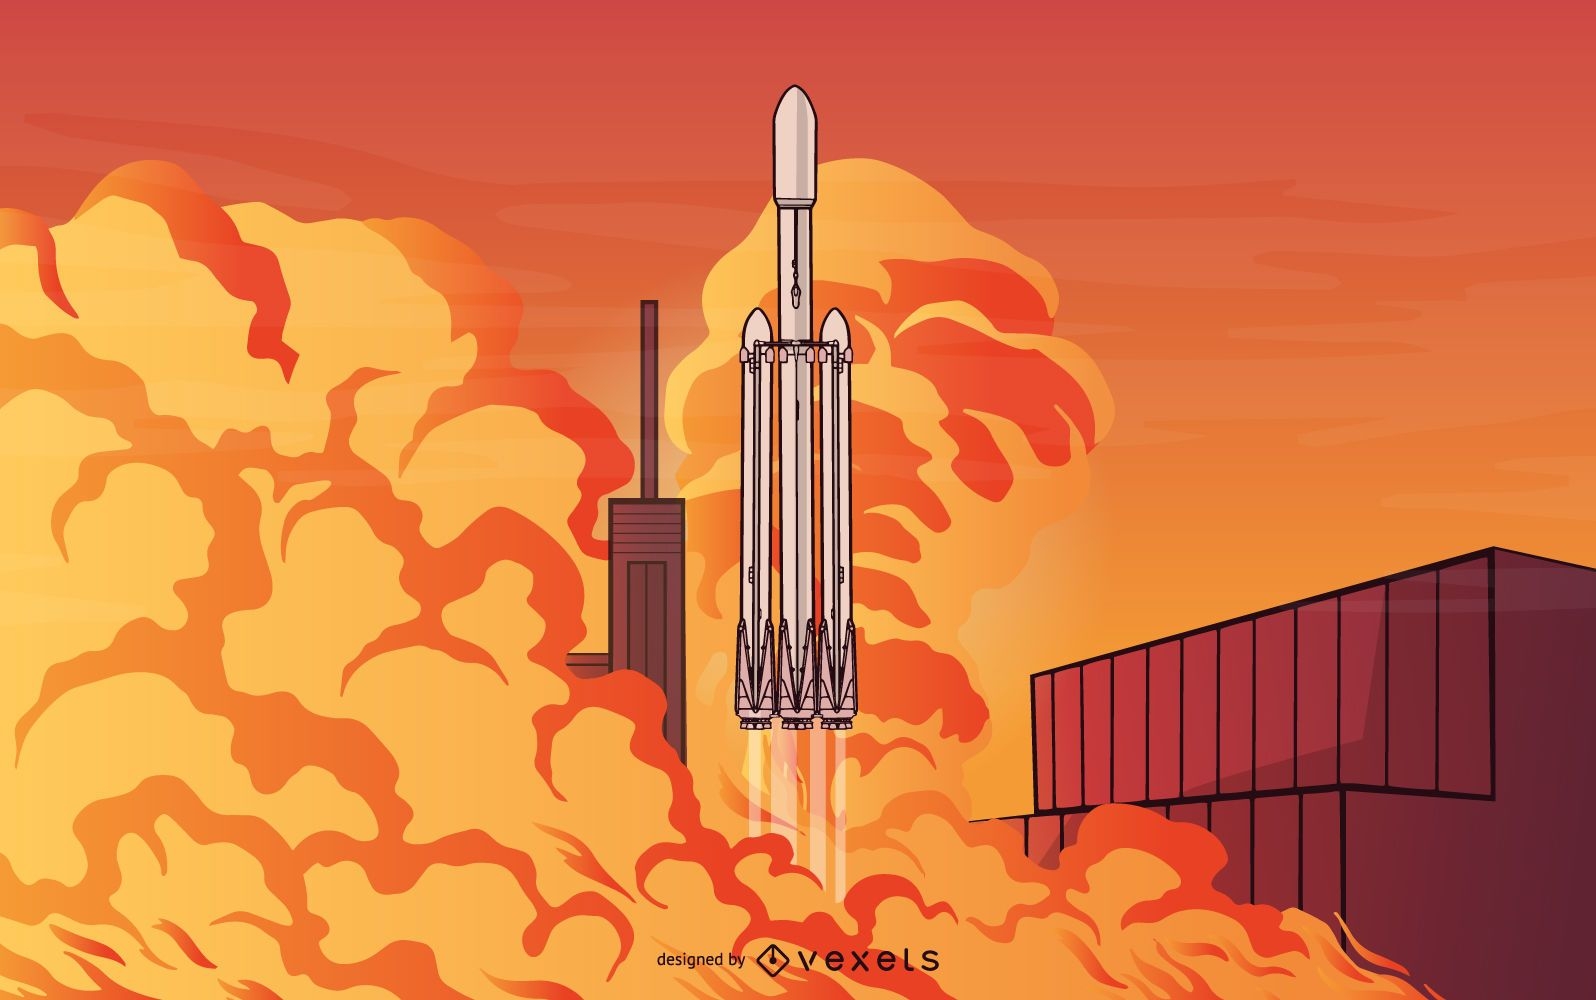 Ilustraci?n del lanzamiento del cohete SpaceX Falcon